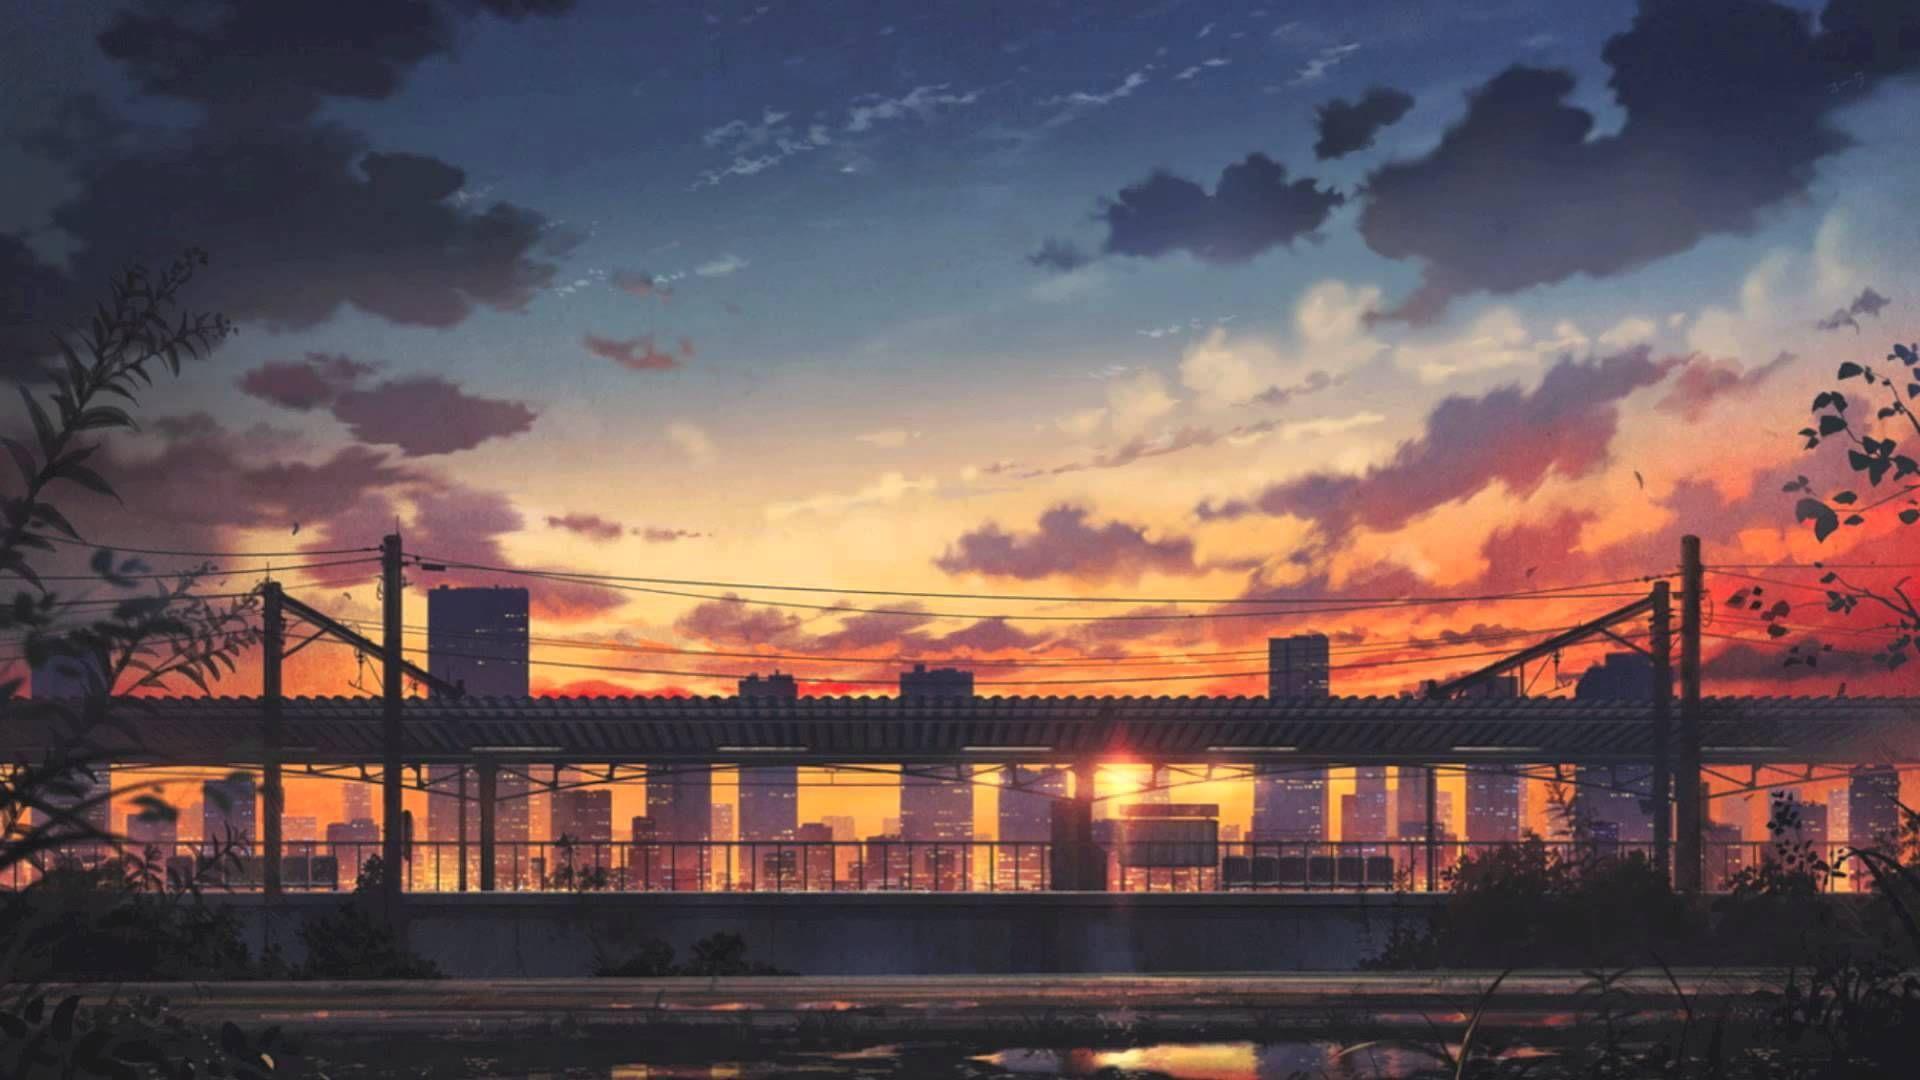 Lo-Fi Anime Landscape Wallpapers - Top Free Lo-Fi Anime ...